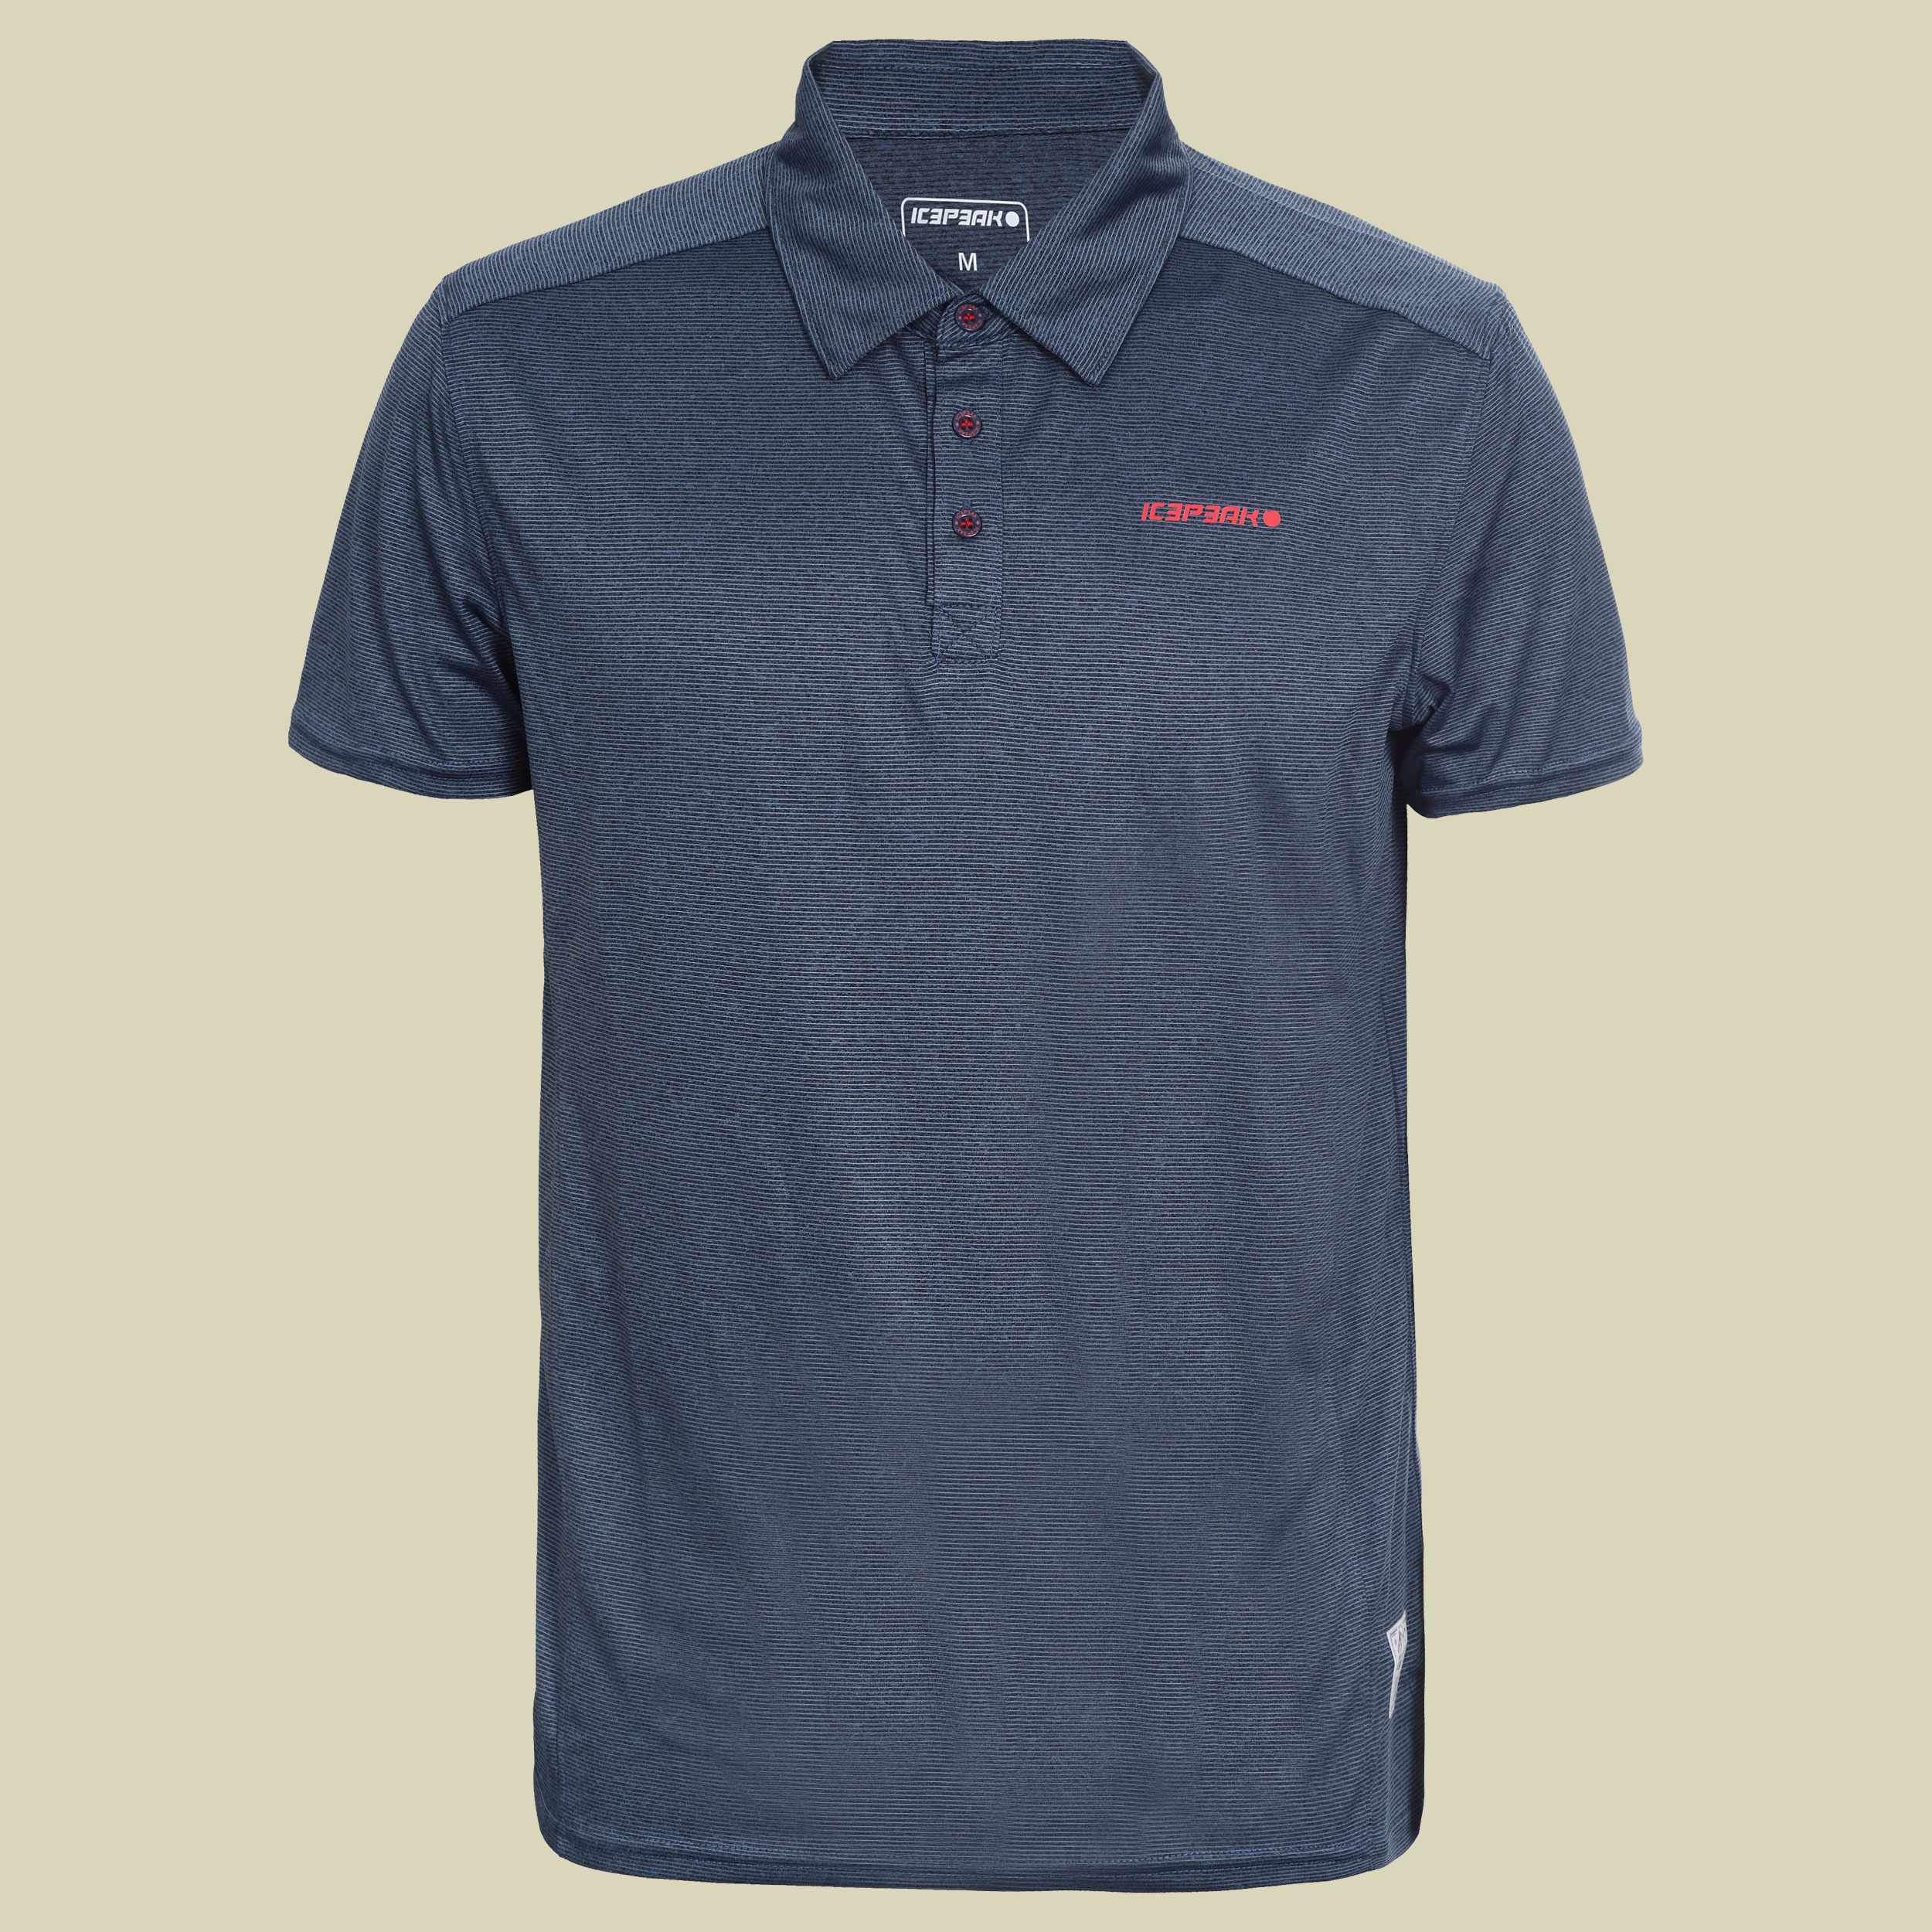 Sharpa Polo Shirt Men 57749 647 Größe S Farbe FB363 blue